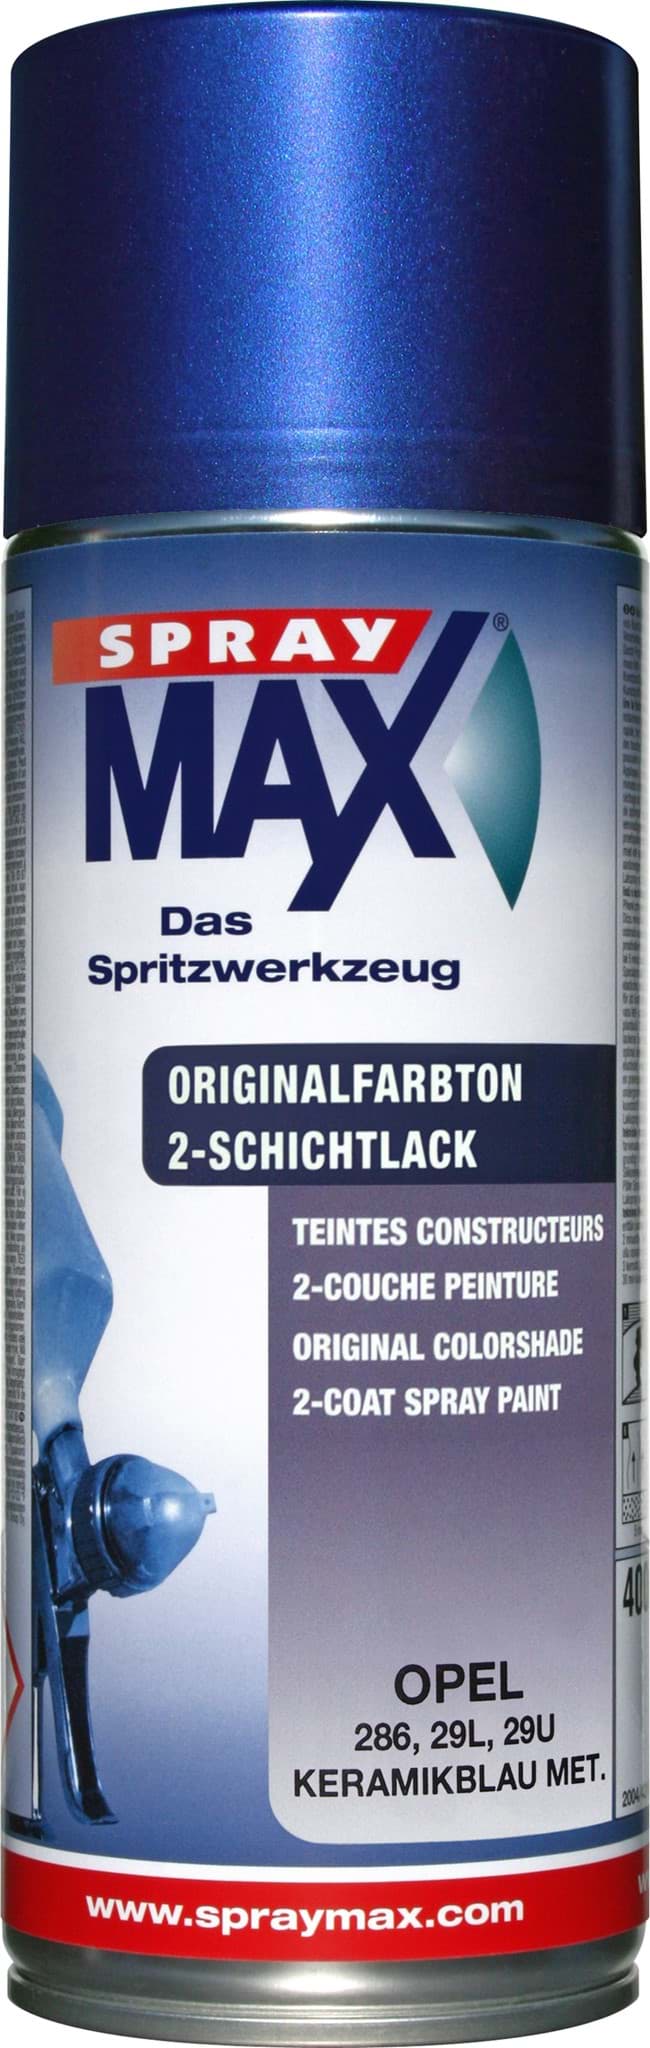 Изображение SprayMax Originalfarbton für Opel 286 keramikblau met.